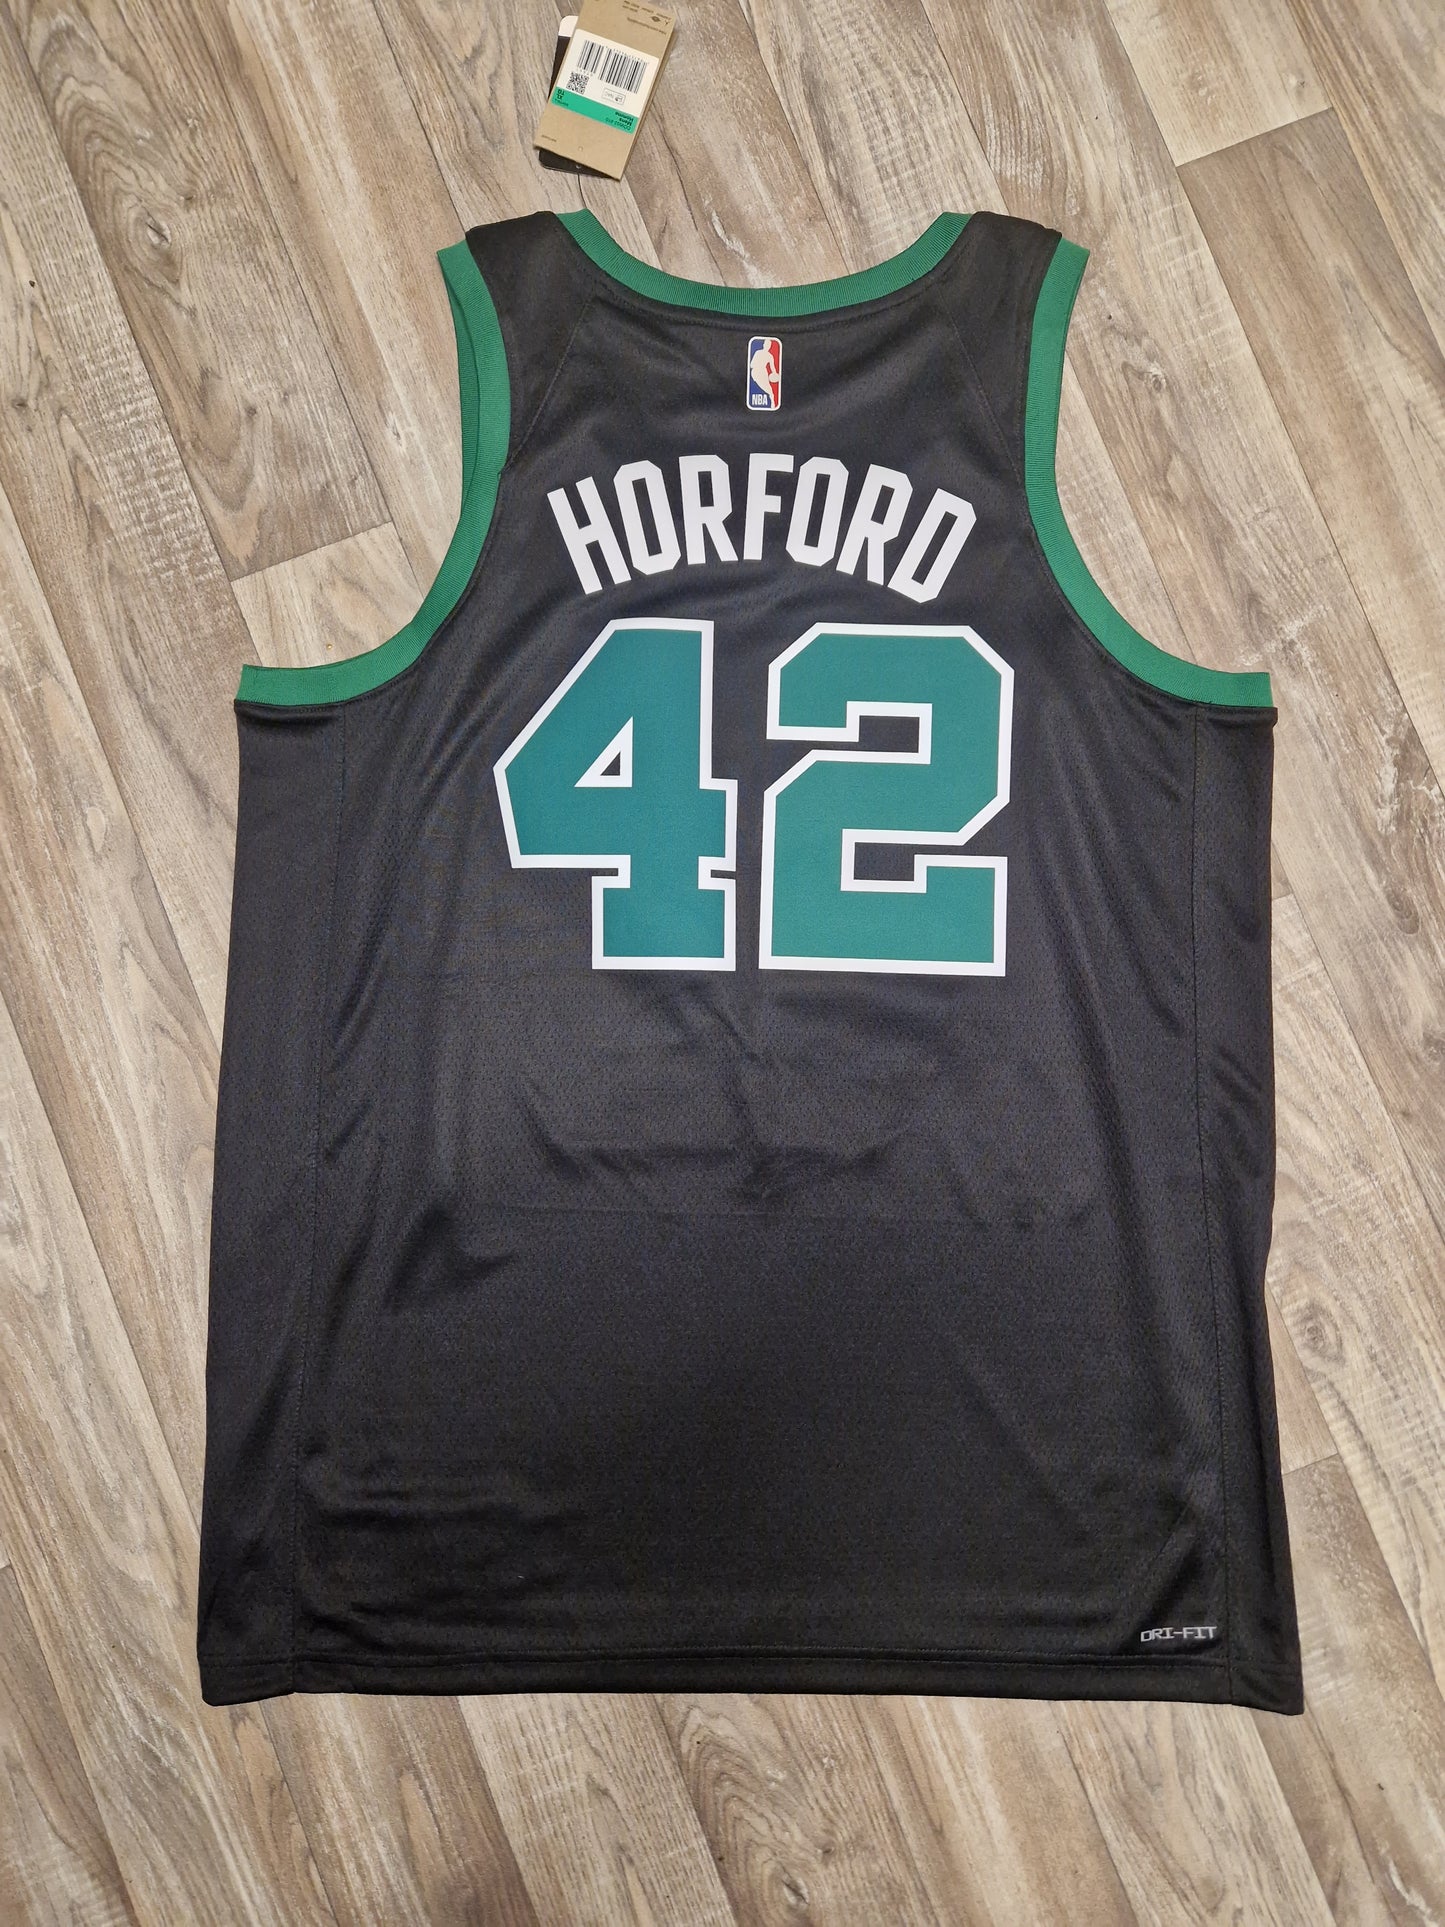 Al Horford Boston Celtics Jersey Size XL